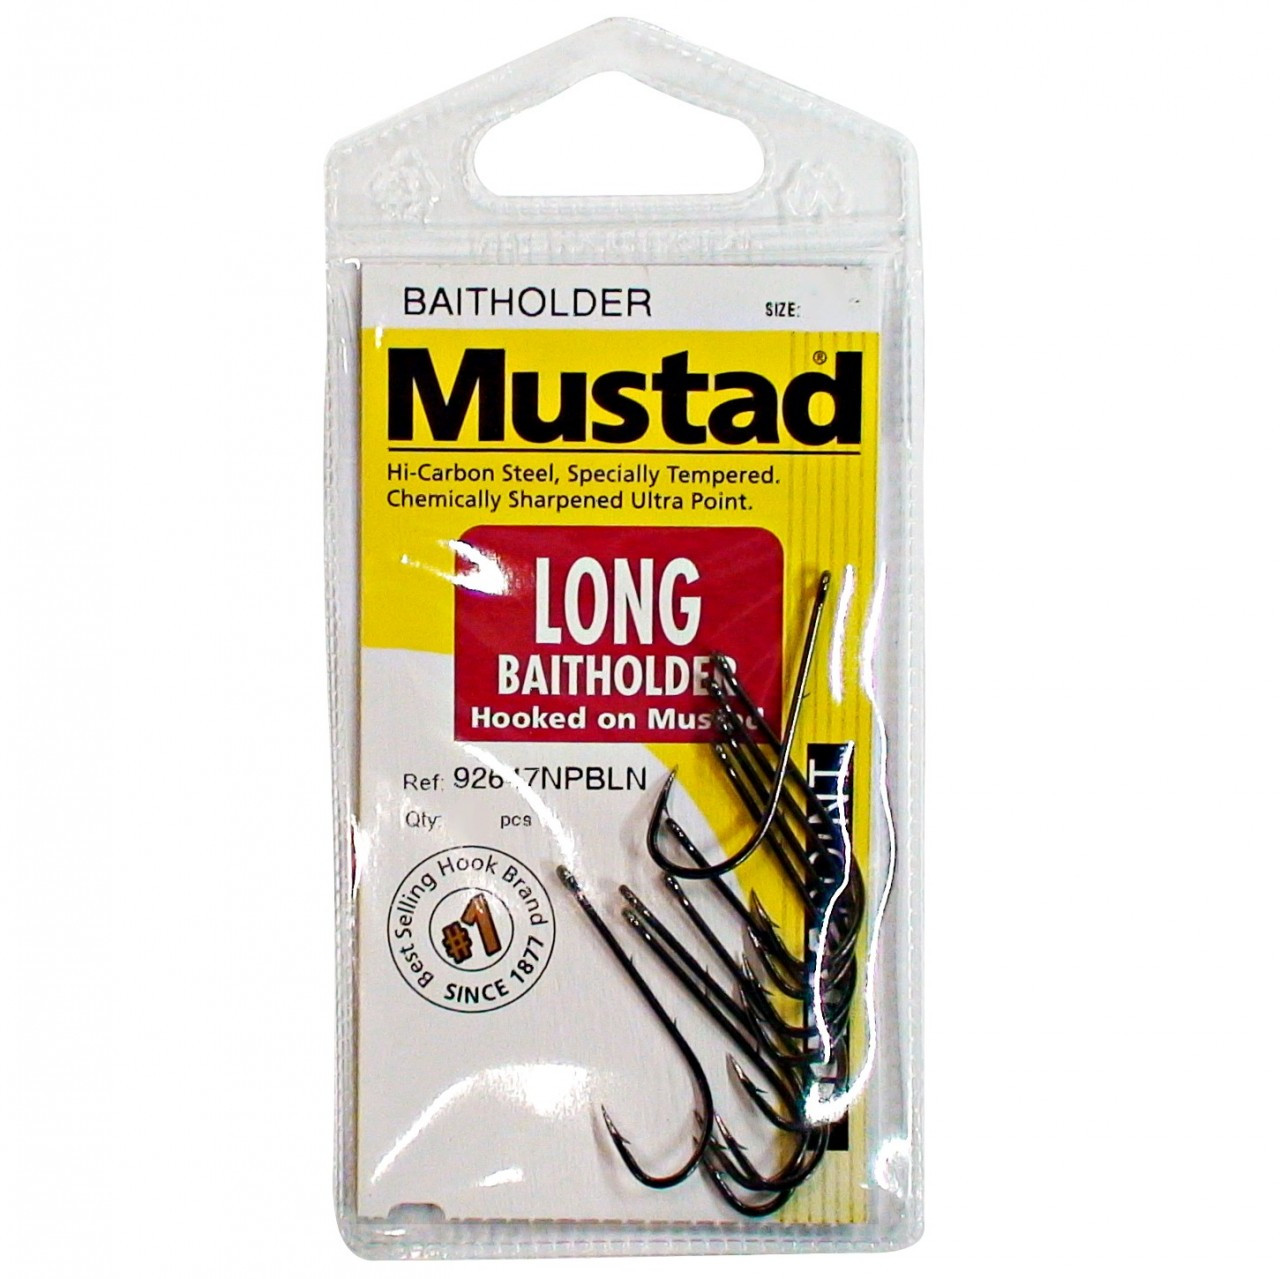 Mustad (Long Baitholder ) Fishing Hooks Single Packet 92647NPBLN